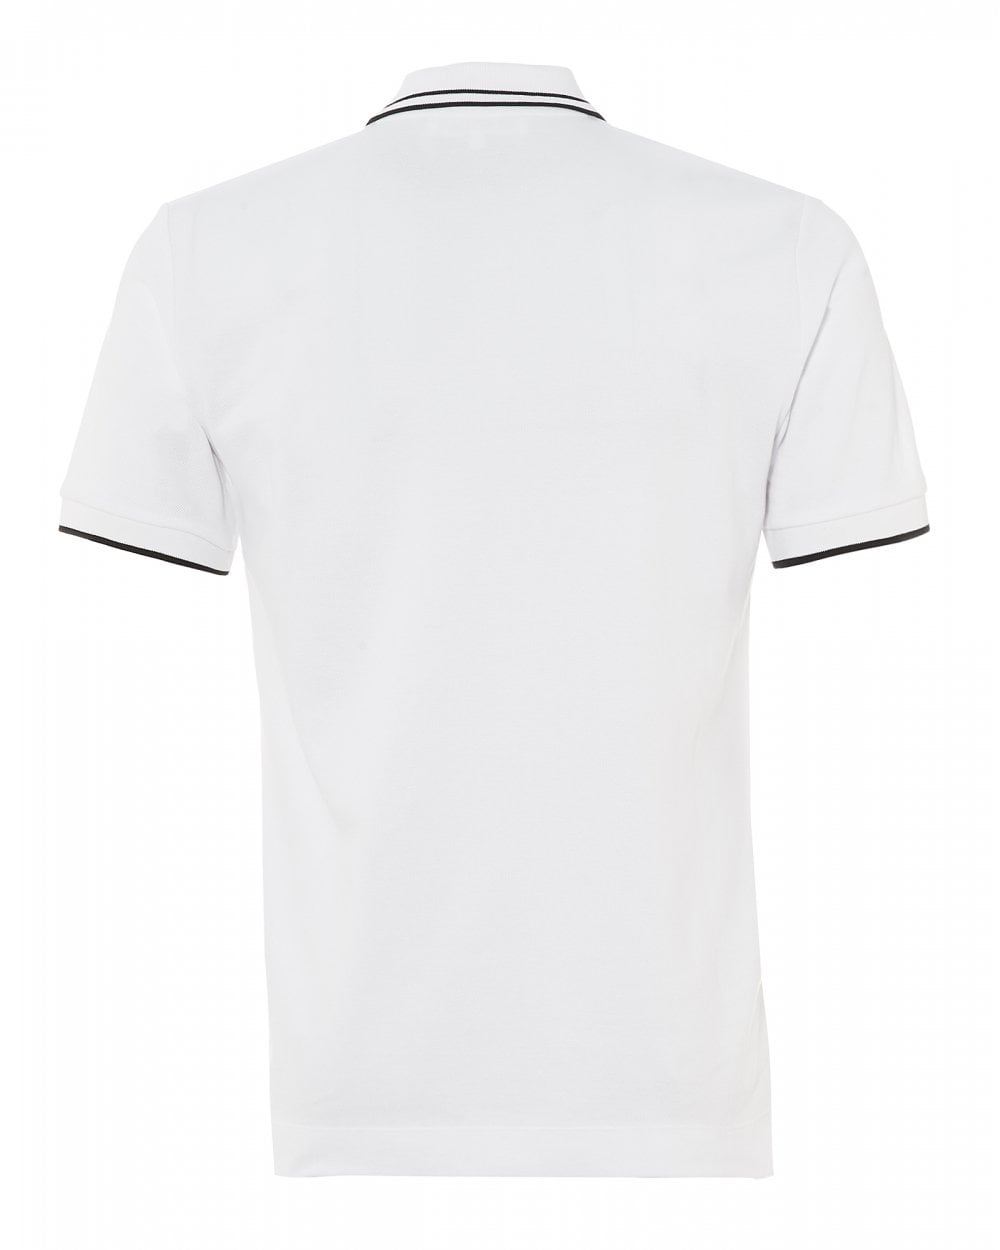 Black and White Polo Logo - McQ by Alexander McQueen Mens Swallow Logo Optic White Polo Shirt